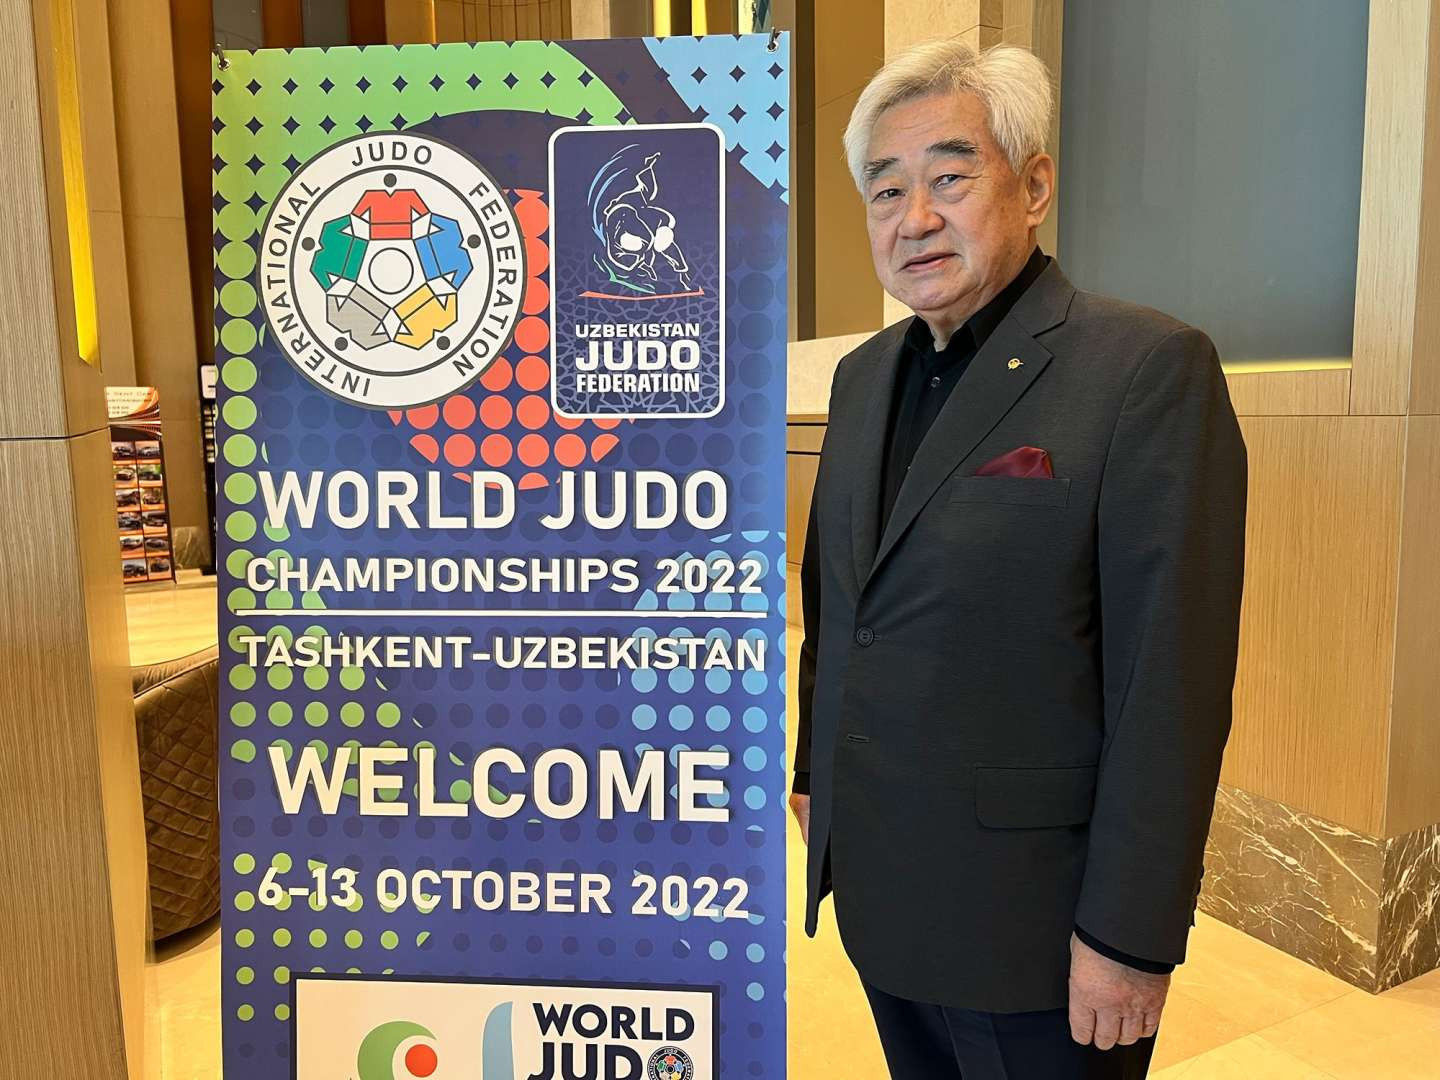 World Taekwondo President Choue Chung-won was invited to the 2022 World Judo Championships by IJF President Marius Vizer ©IJF